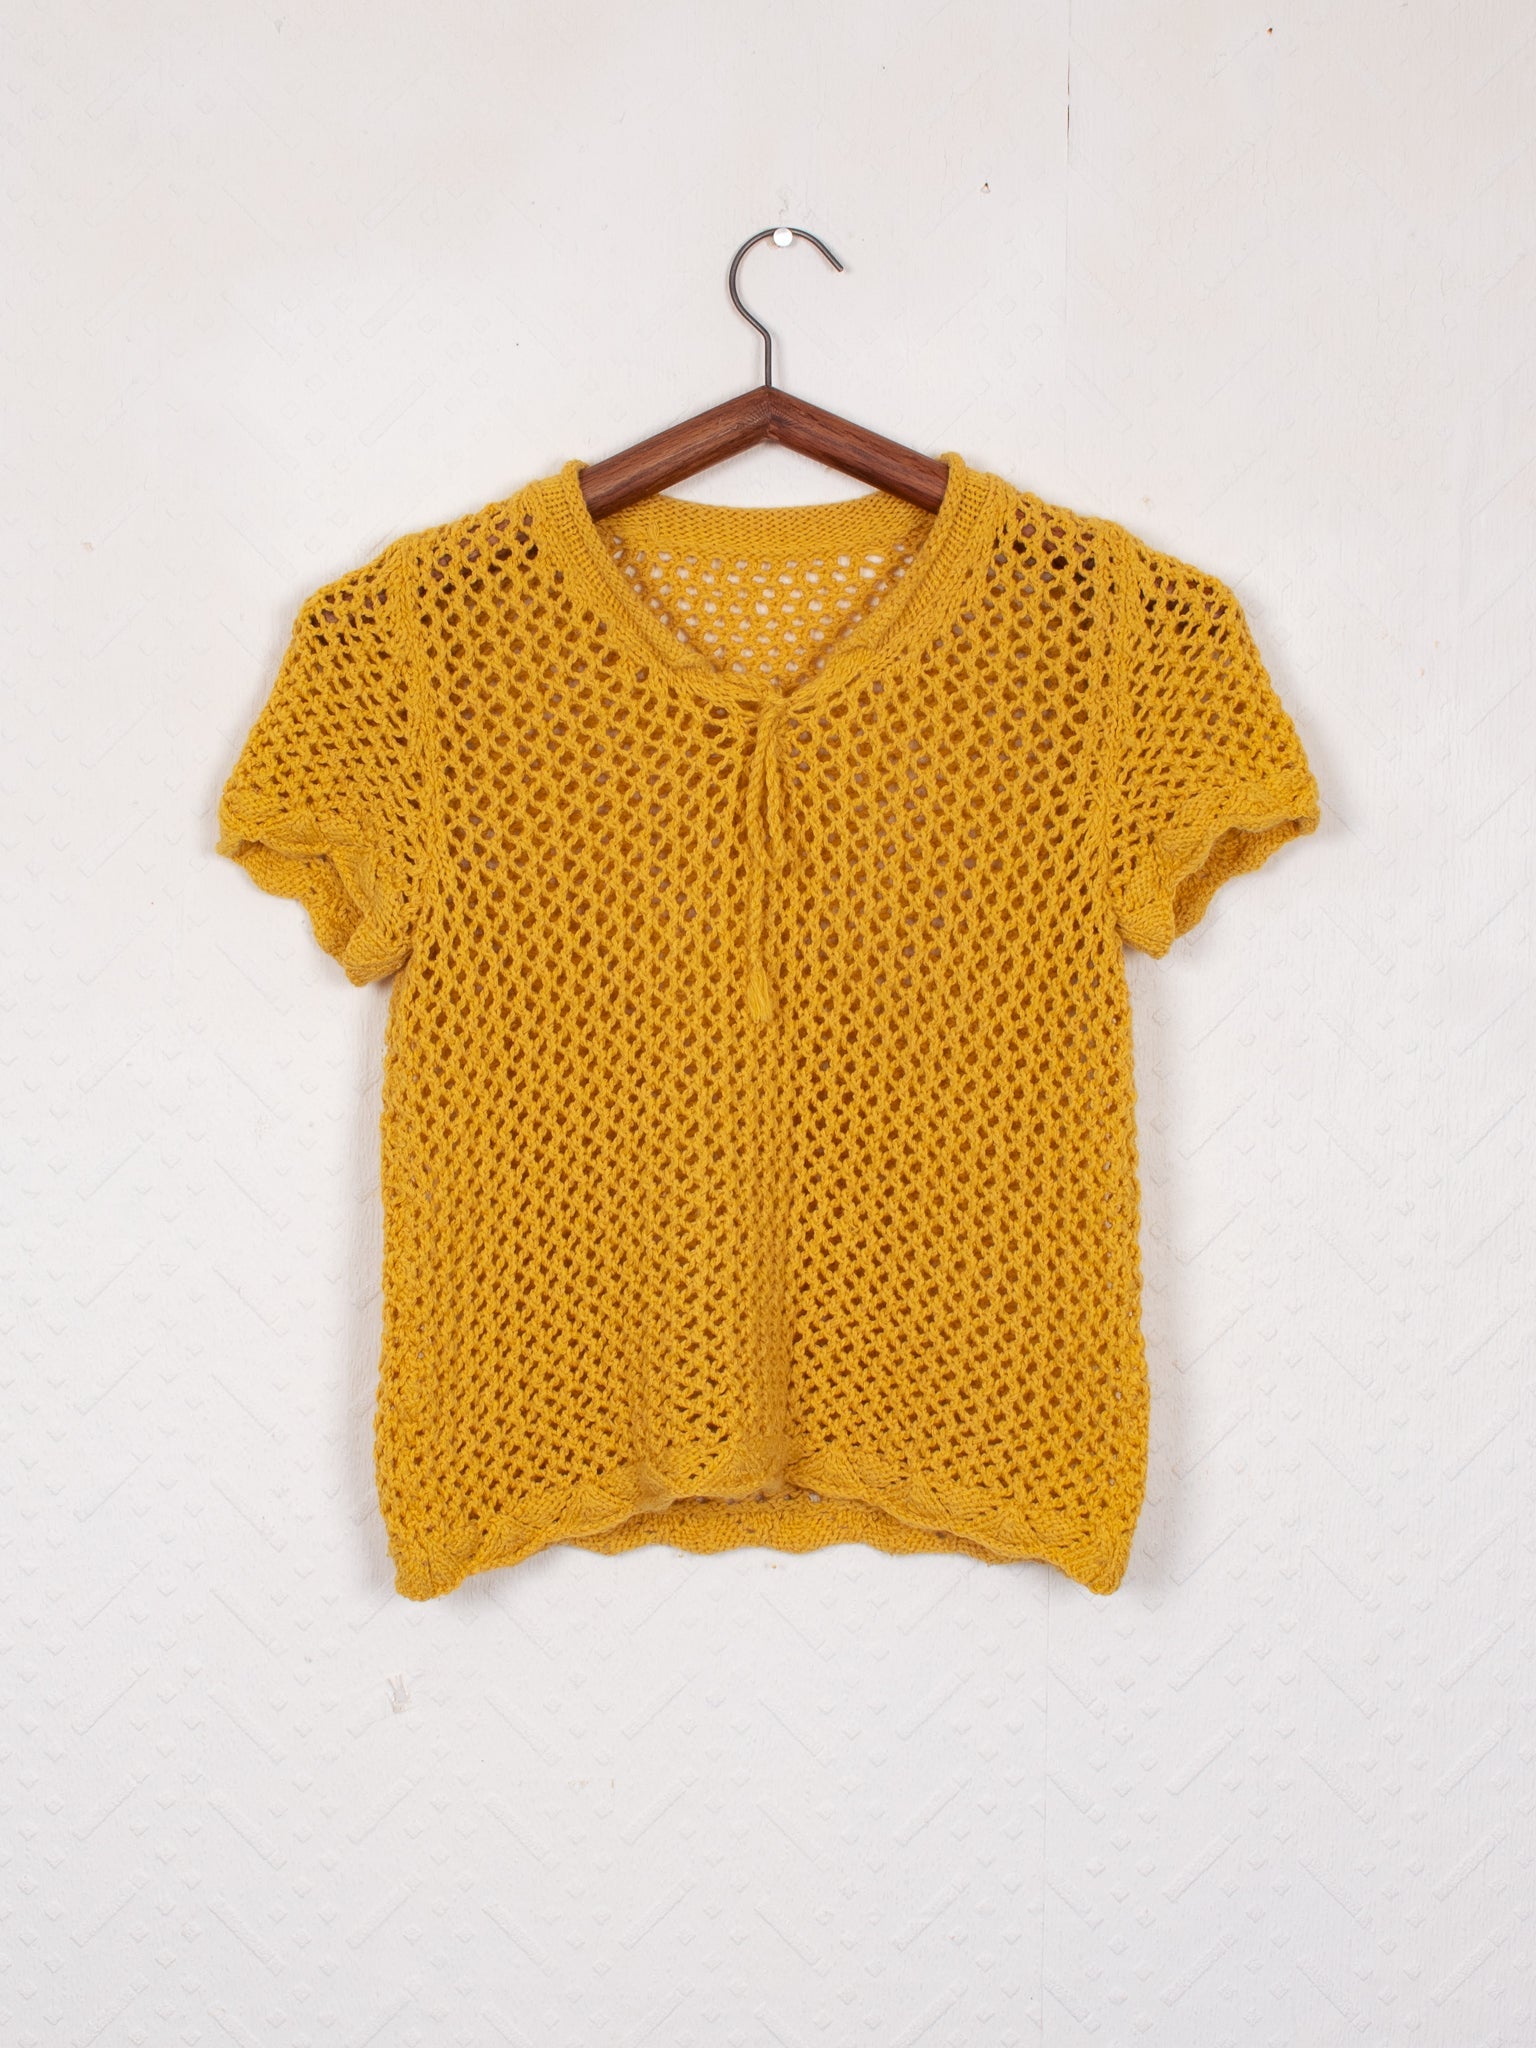 shirts & blouses 30s Crochet Top - S